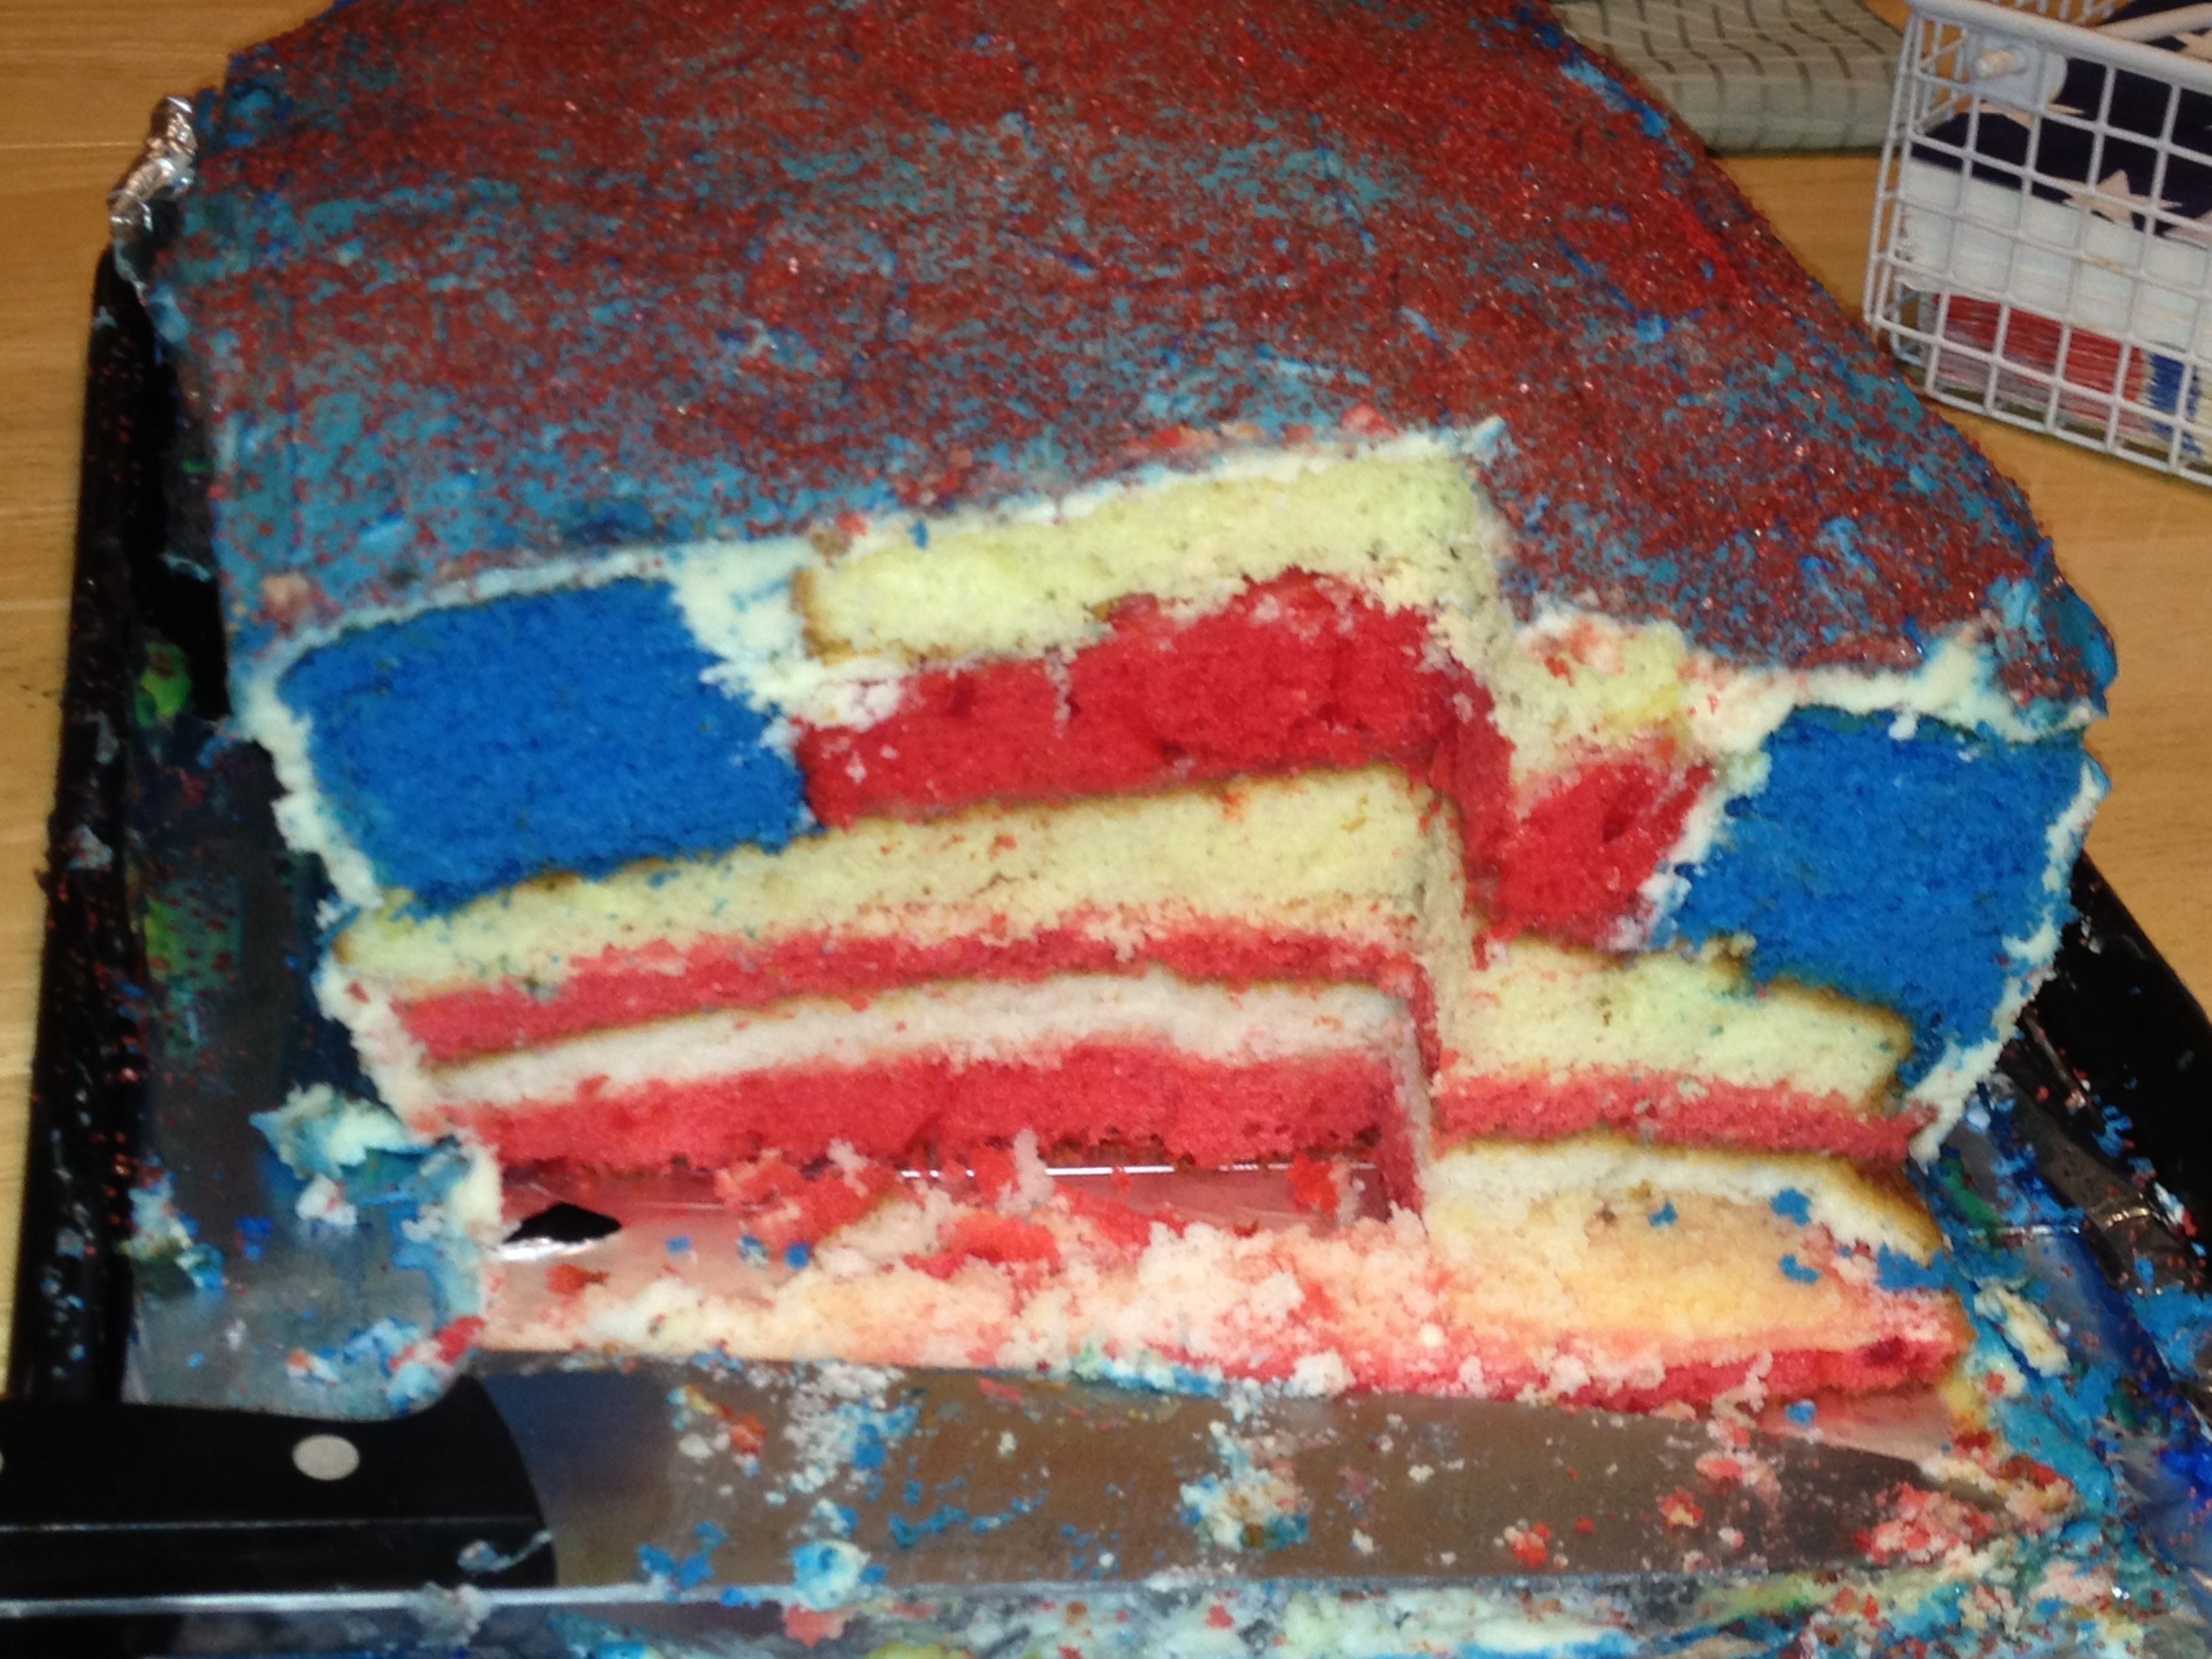 50th Birthday Cake Fail - Mom Loves Baking